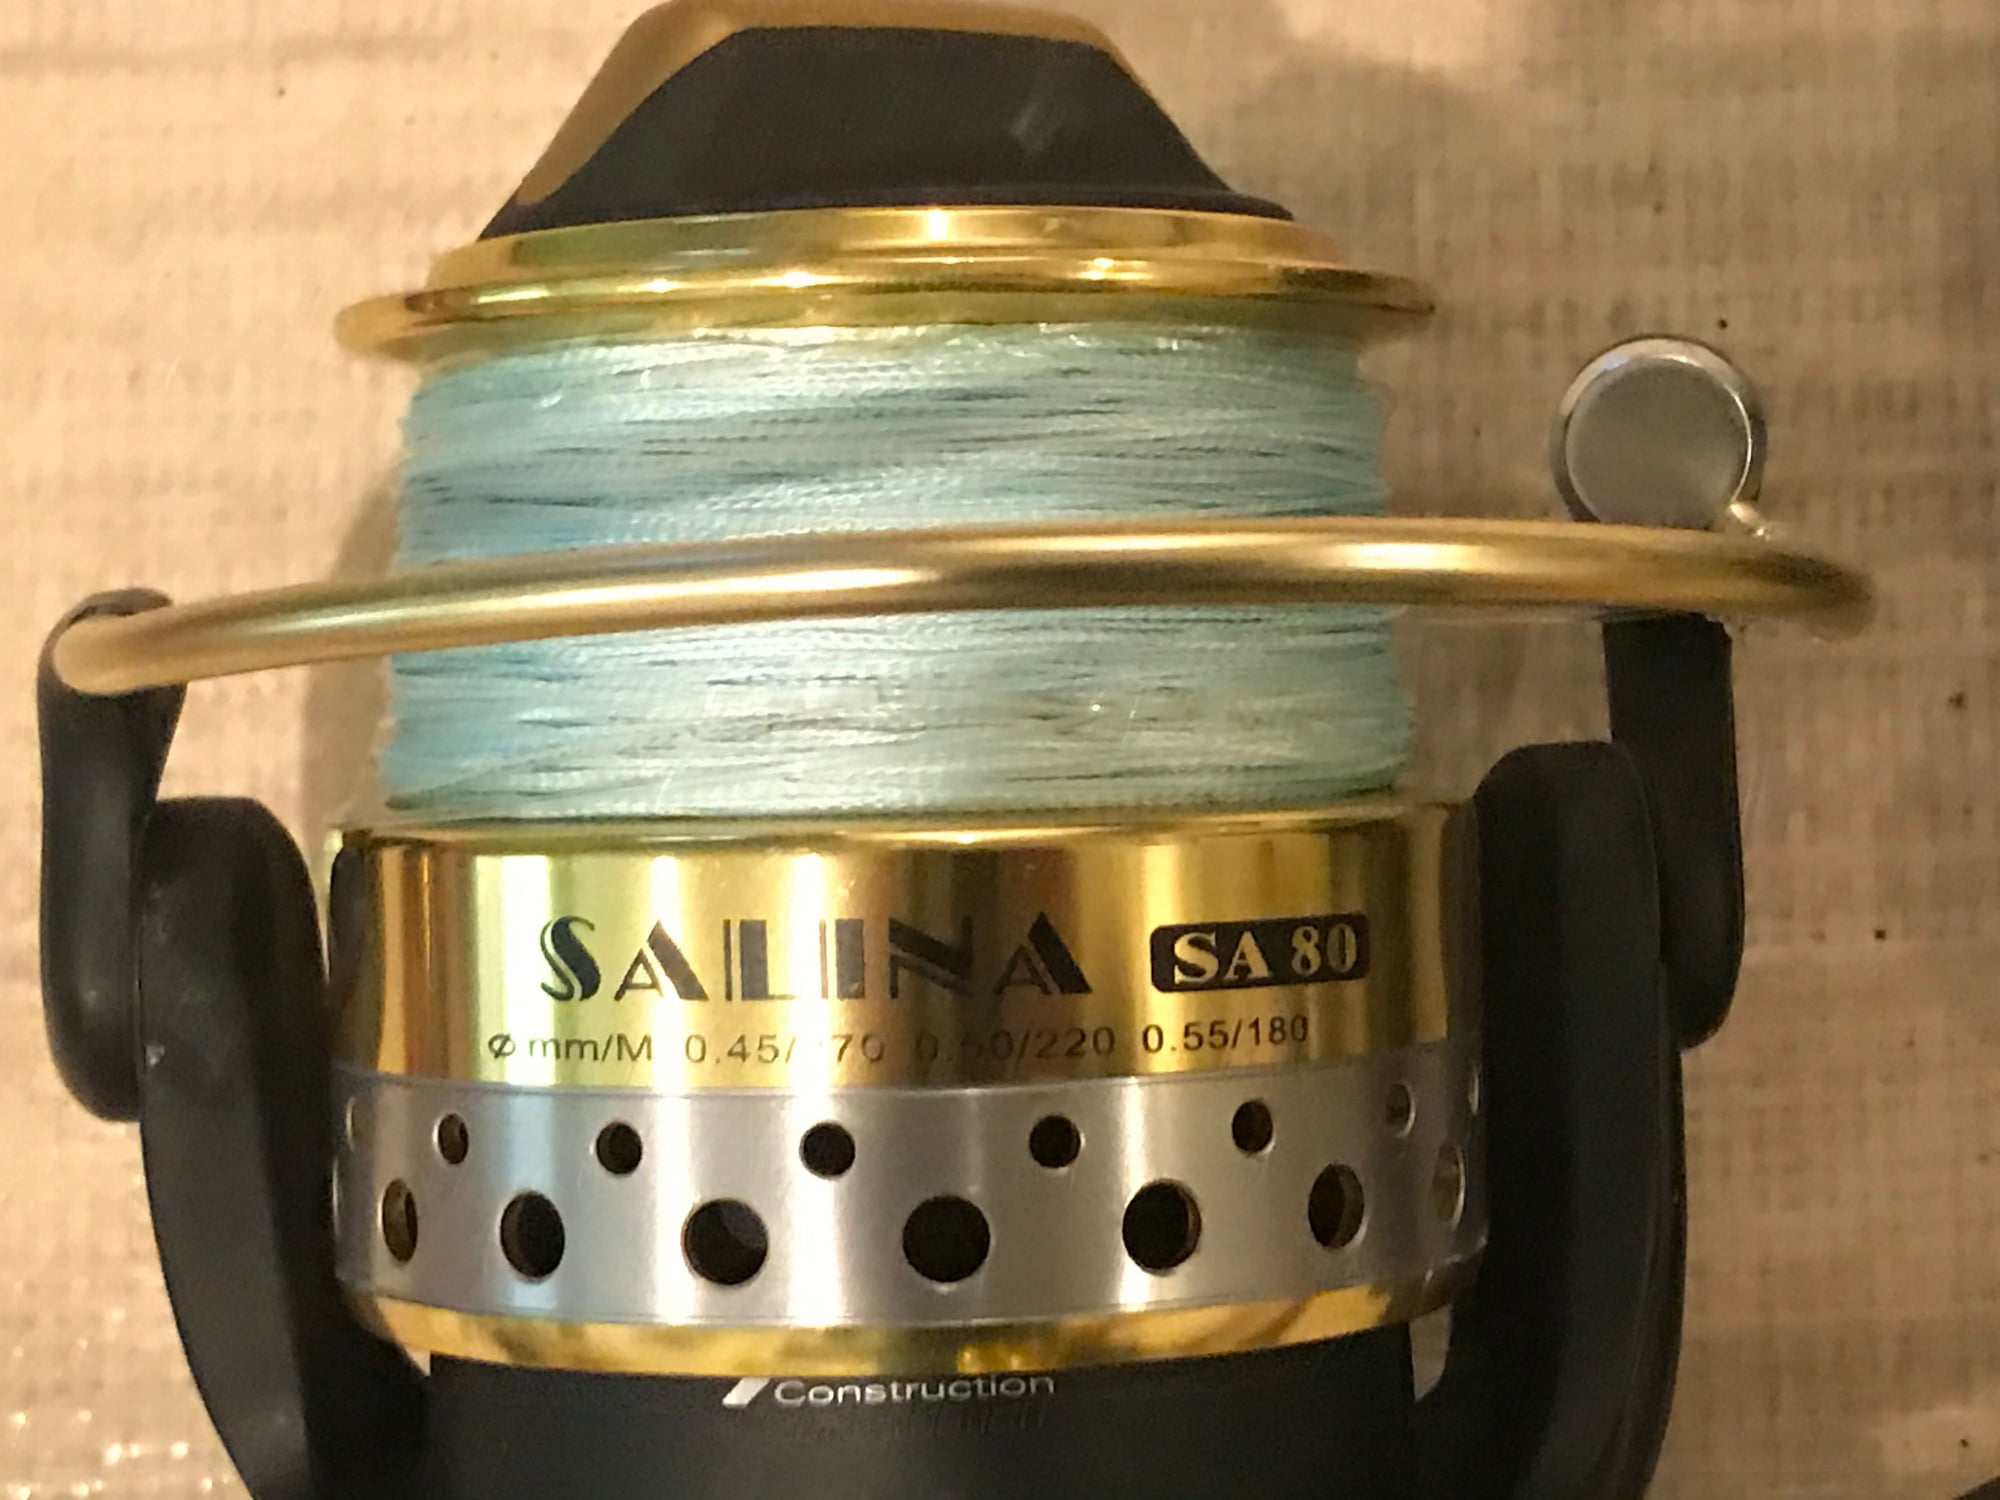 Okuma Salina - SA 80 Spinning reels ***spooled with Braid - The